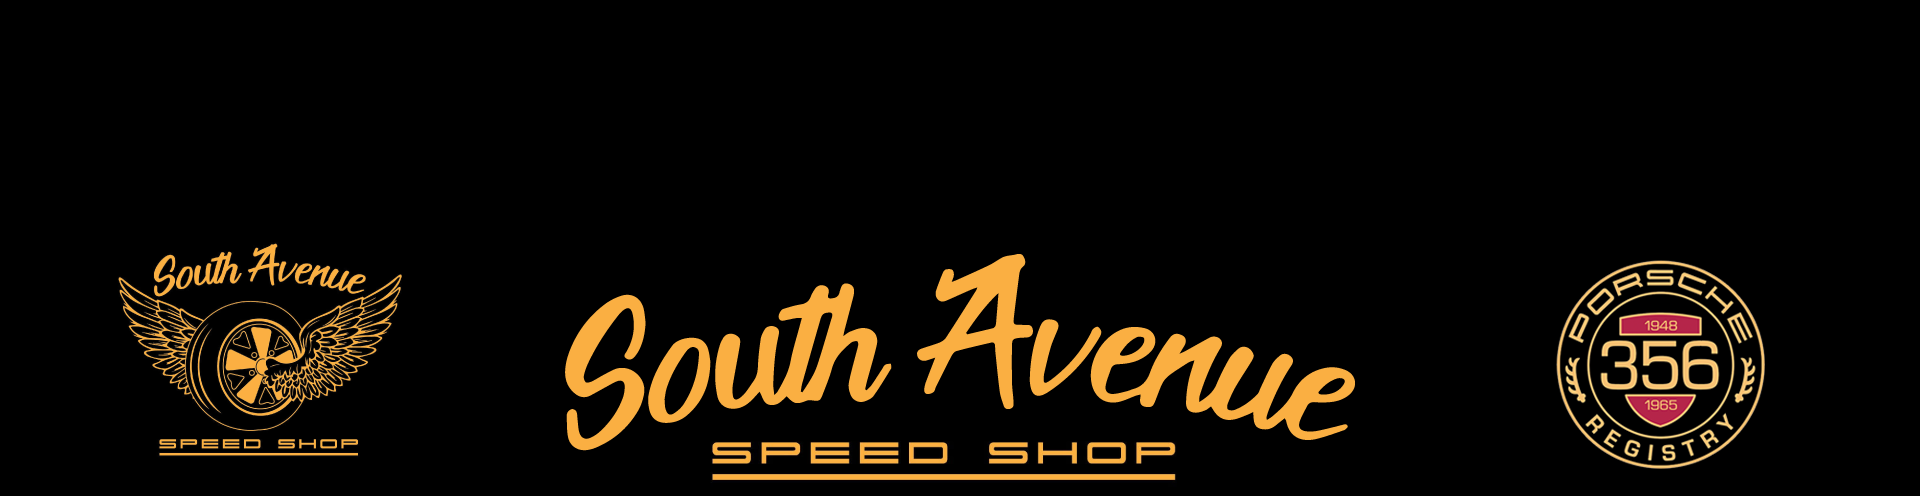 South Avenue Speed Shop